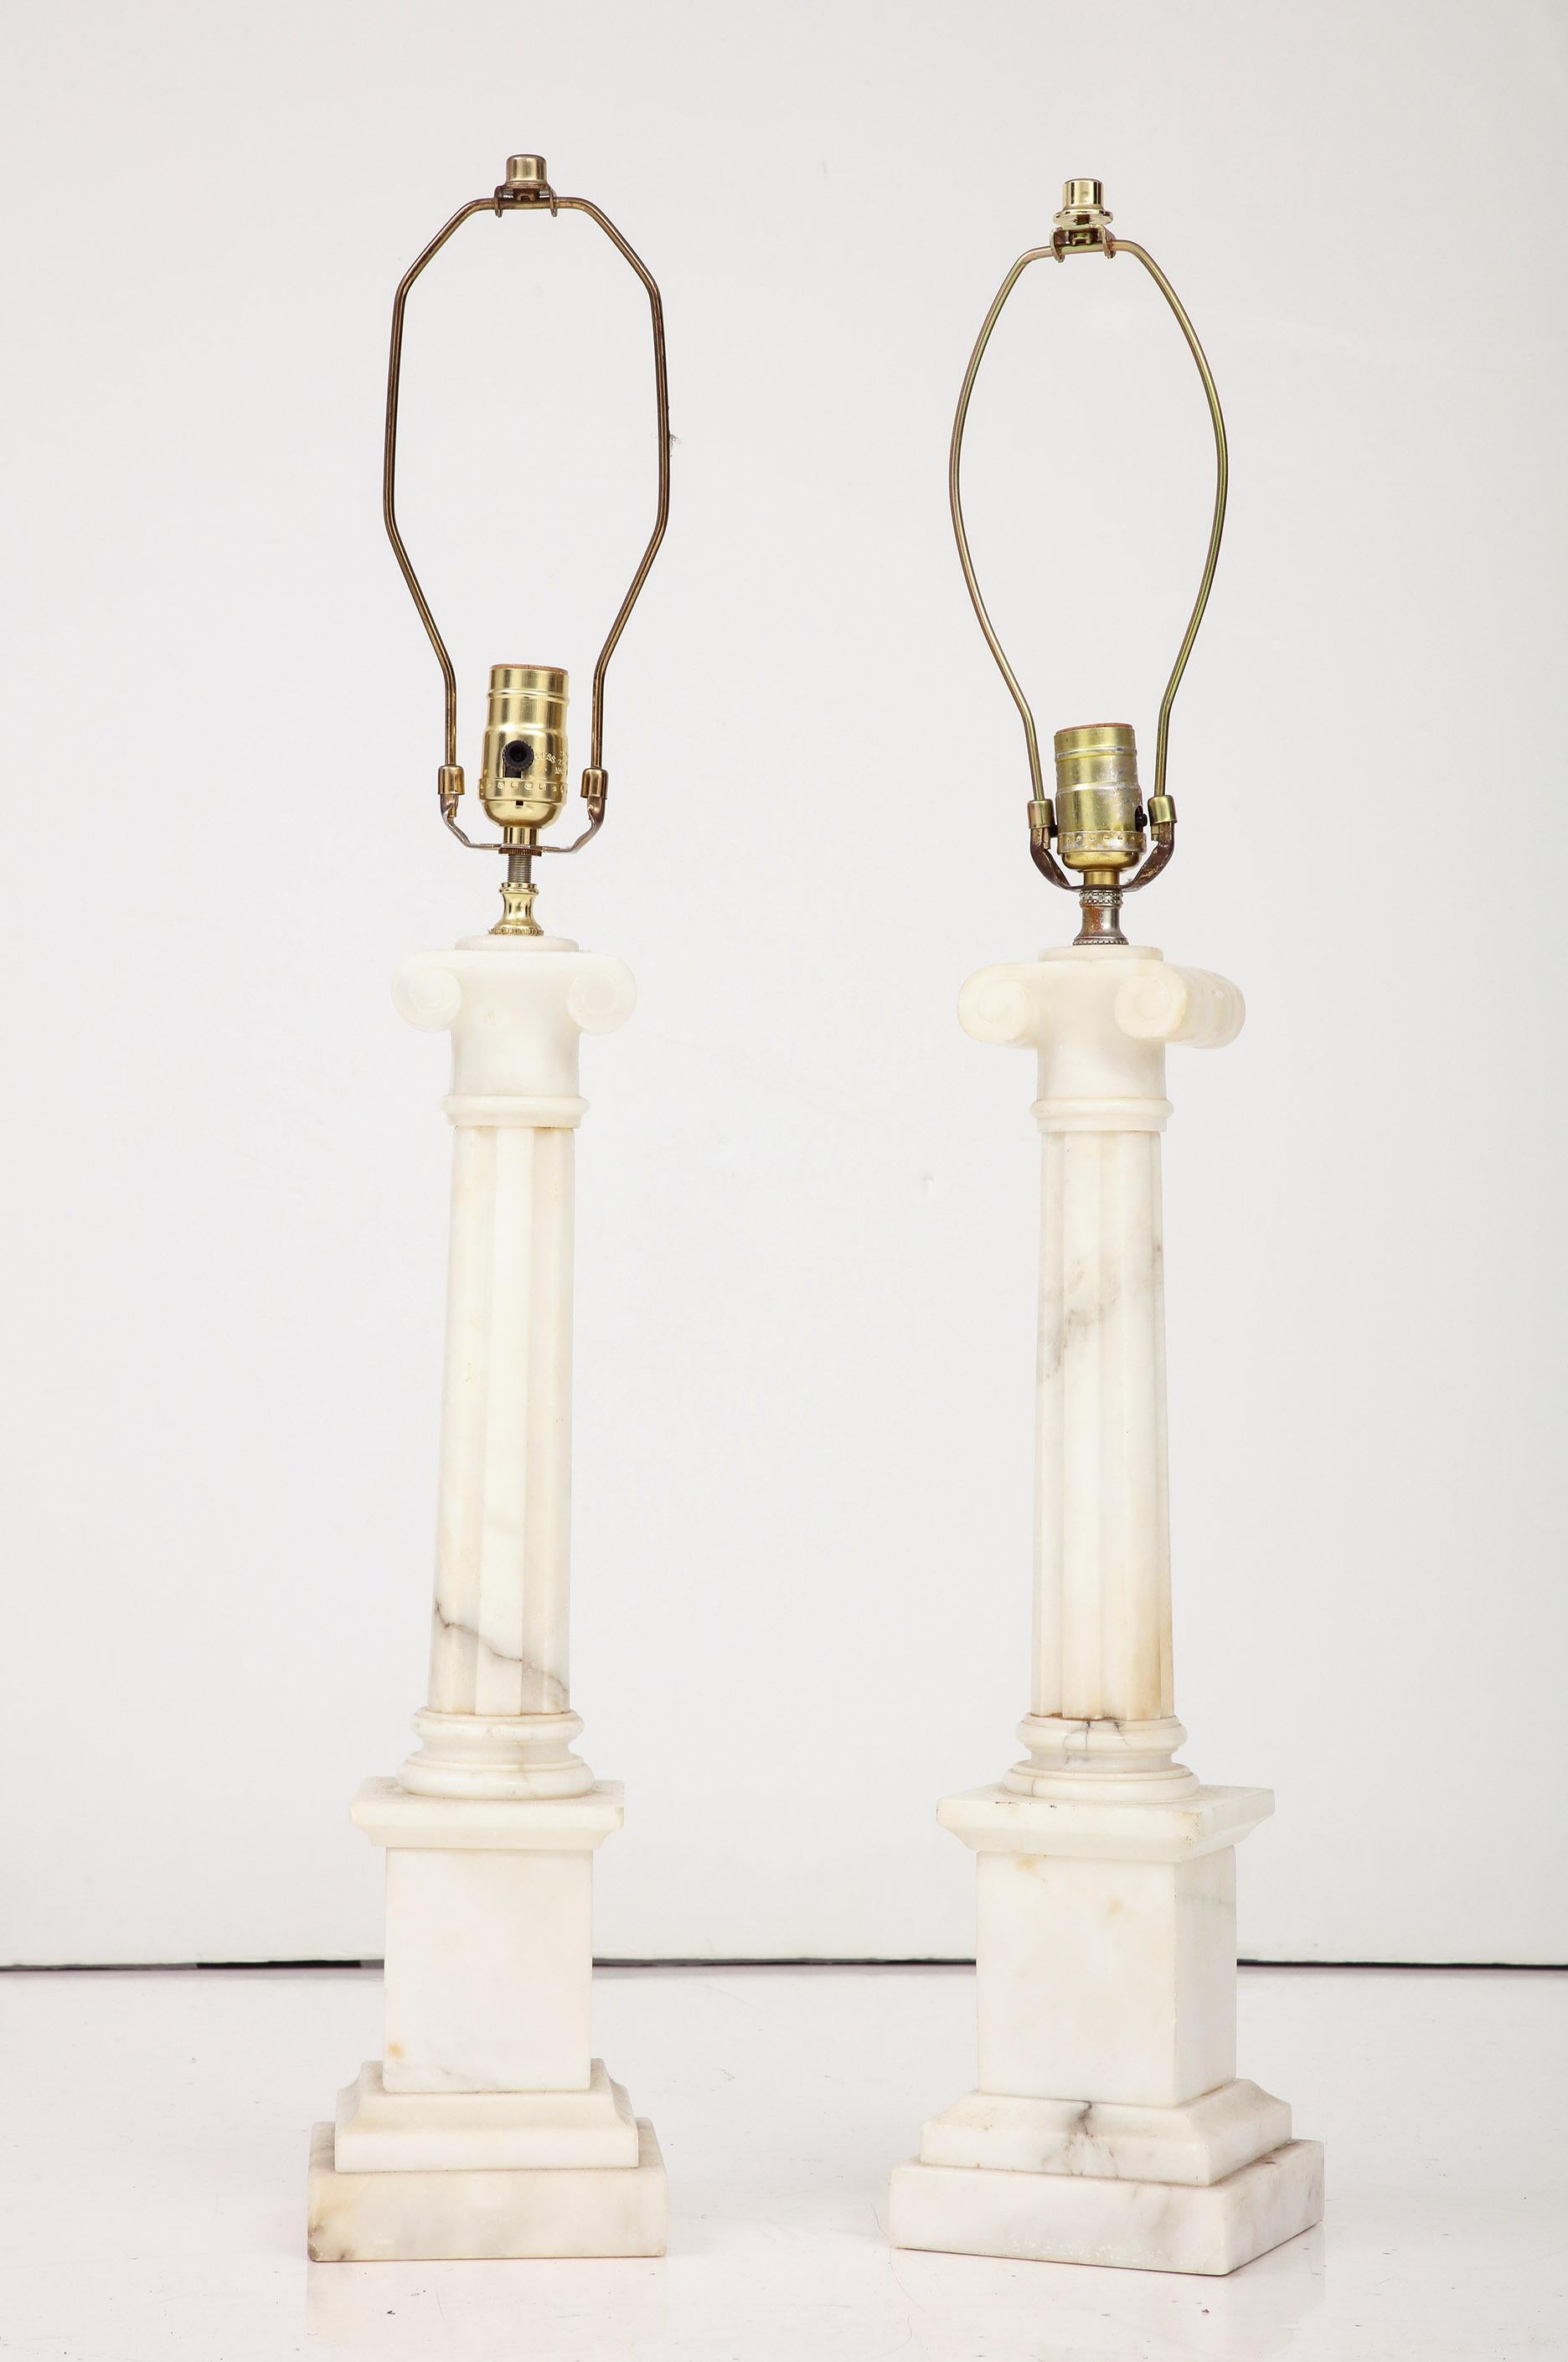 Pair of Italian Neo-classic Carrera marble column lamps. 
Column Height: 19